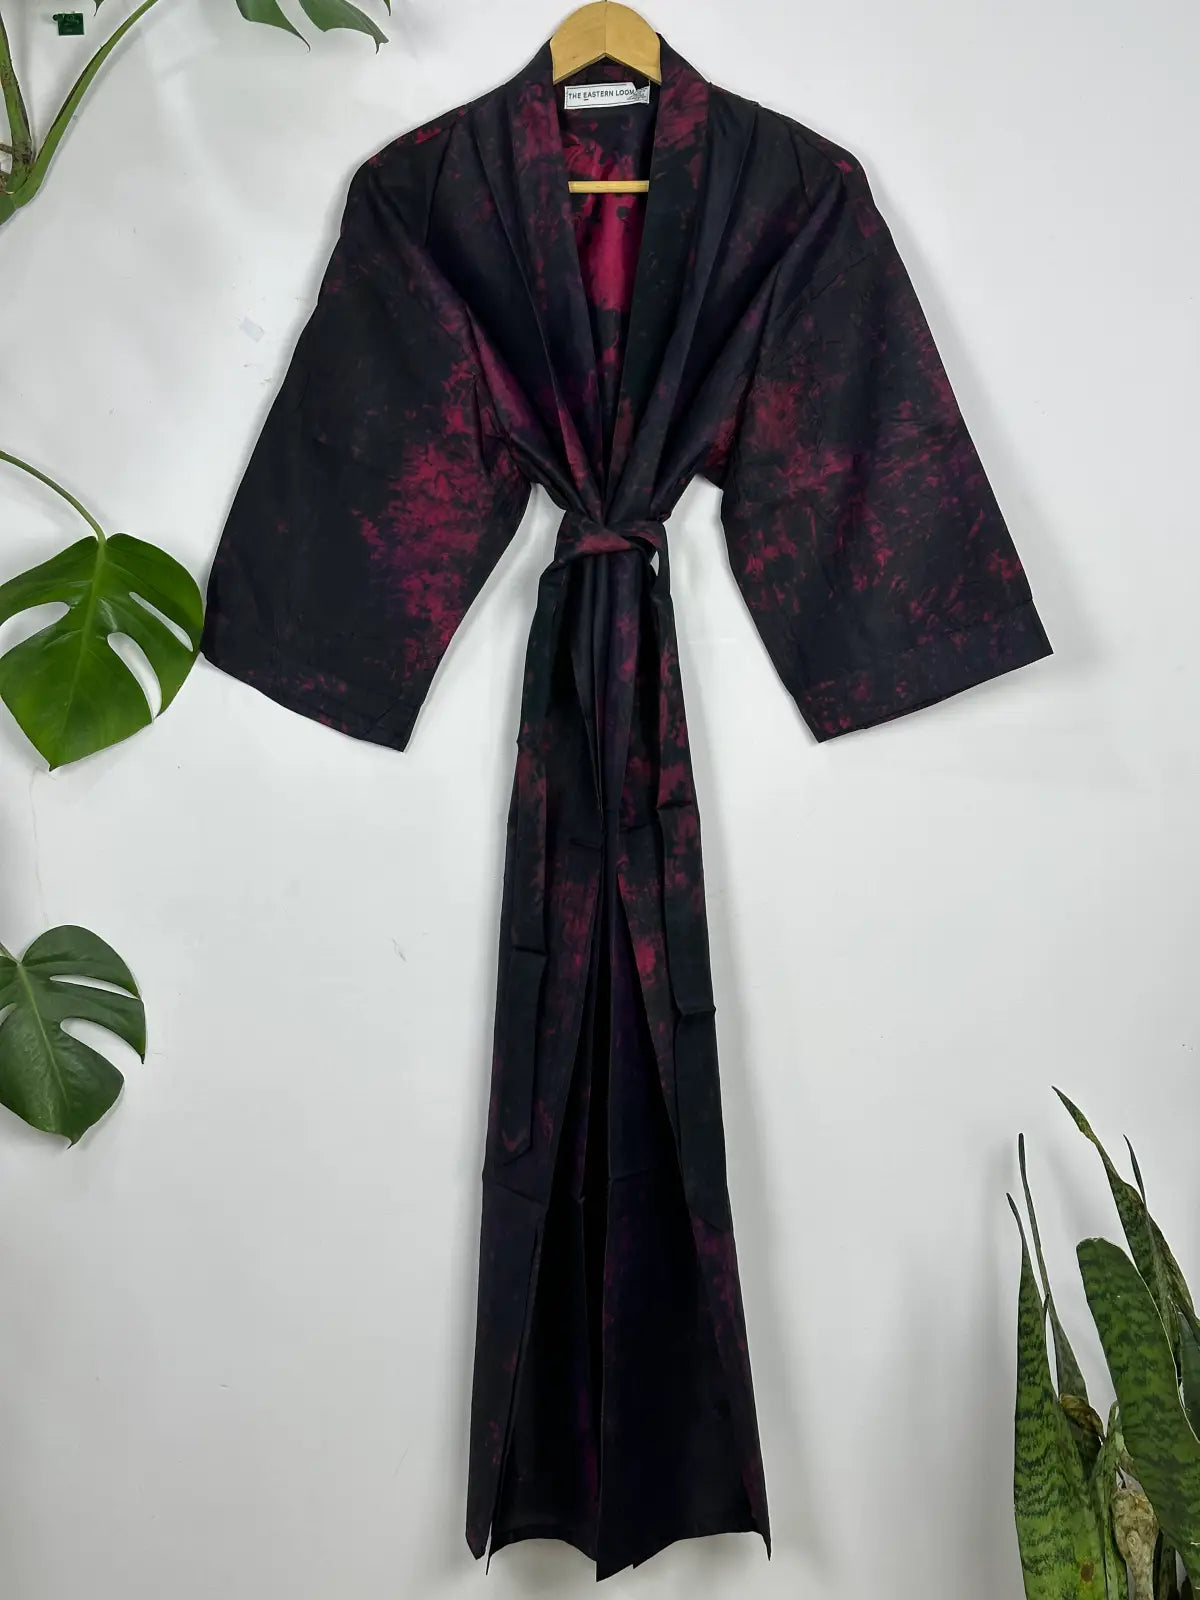 Upcycle Boho Chic Coverup Recycle Silk Sari Kimono | Vintage Elegance House Robe Duster Cardigan Beach Cover Up Sarong | Tropical Floral Summer Dress Kaftan